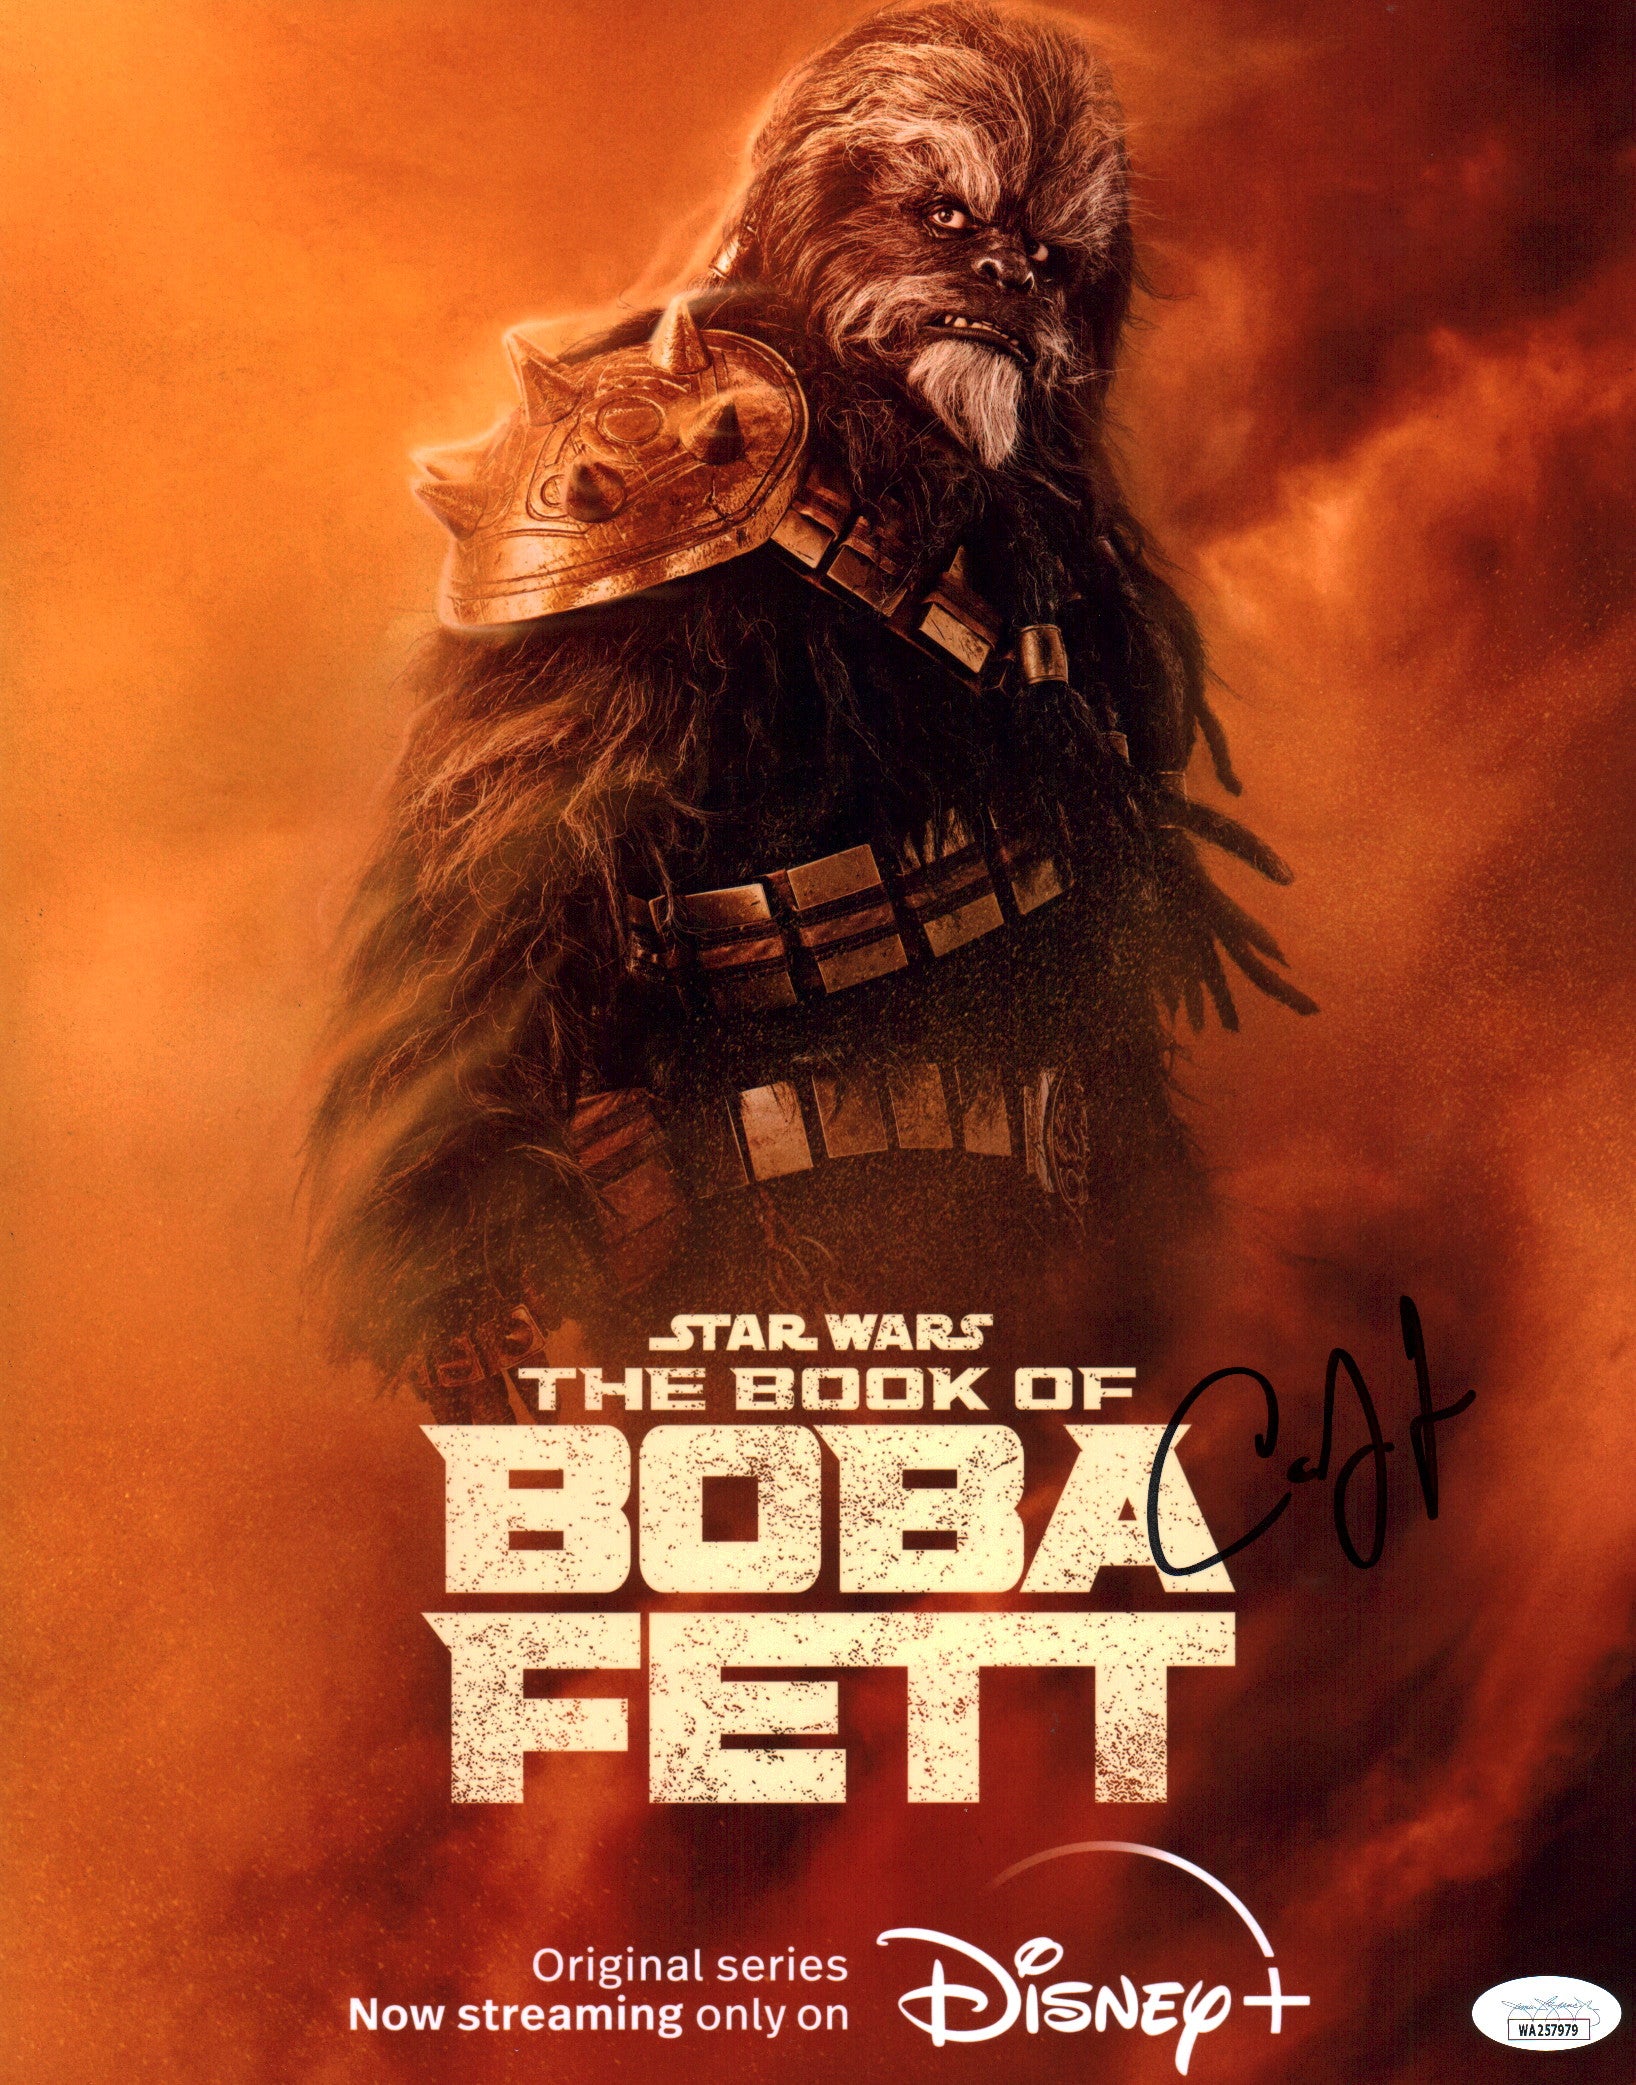 Carey Jones Star Wars The Book of Boba Fett 11x14 Signed Photo Poster JSA COA Certified Autograph